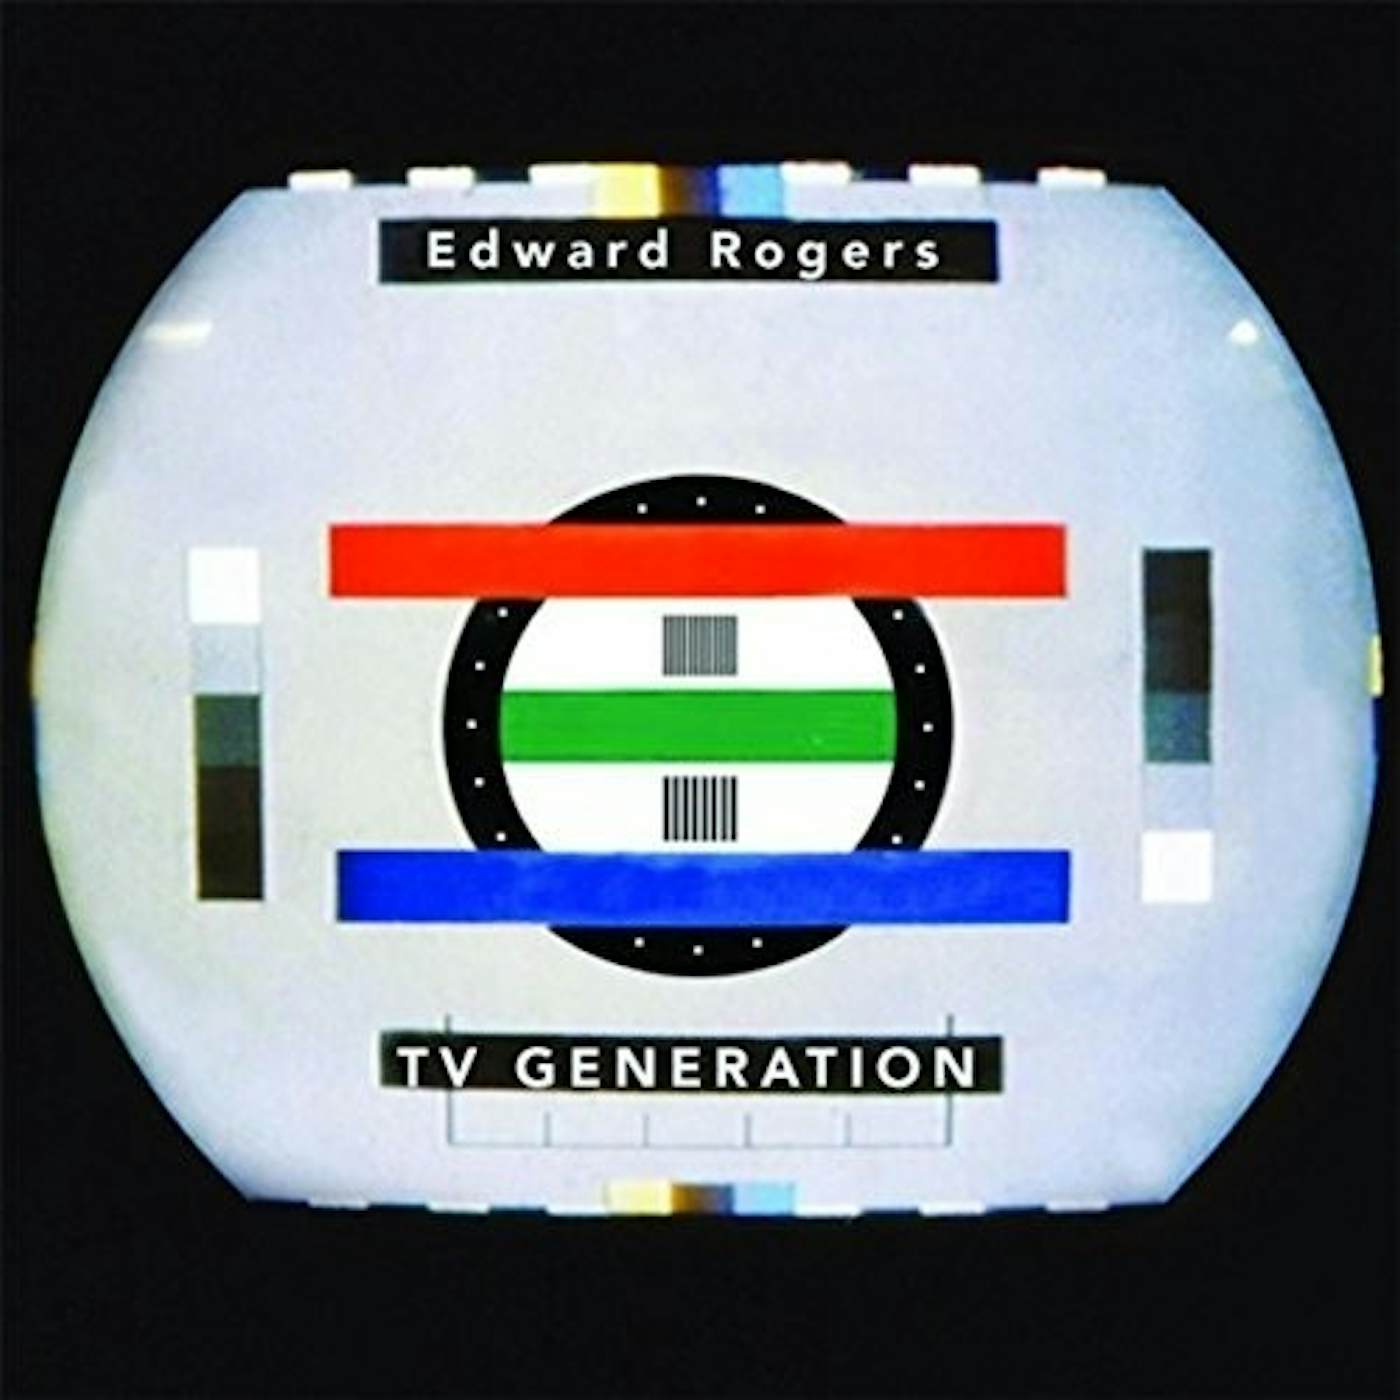 Edward Rogers TV GENERATION CD